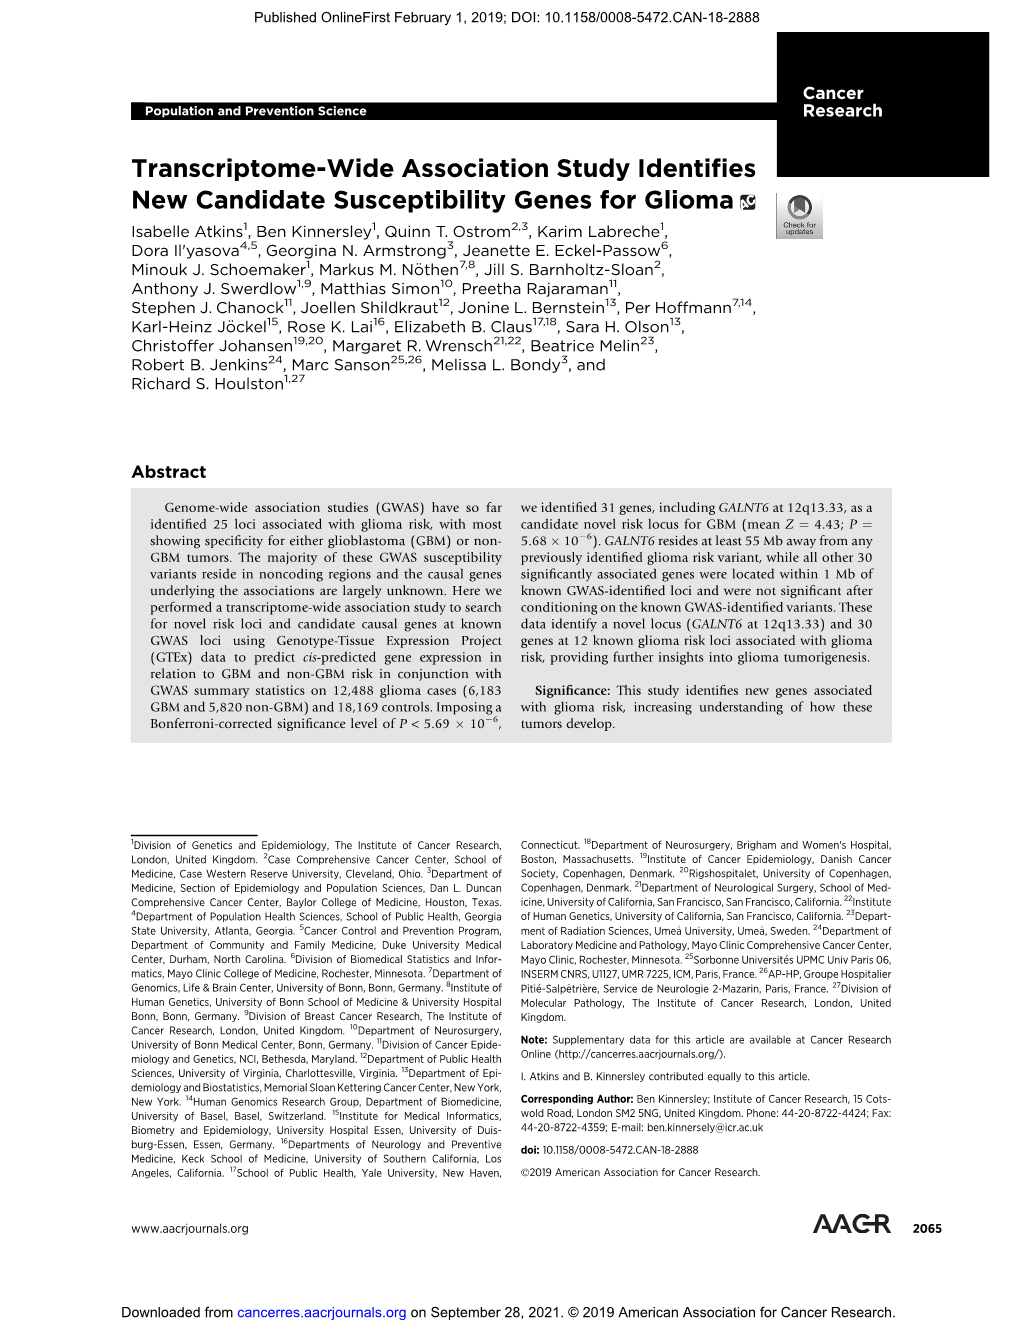 Transcriptome-Wide Association Study Identifies New Candidate Susceptibility Genes for Glioma